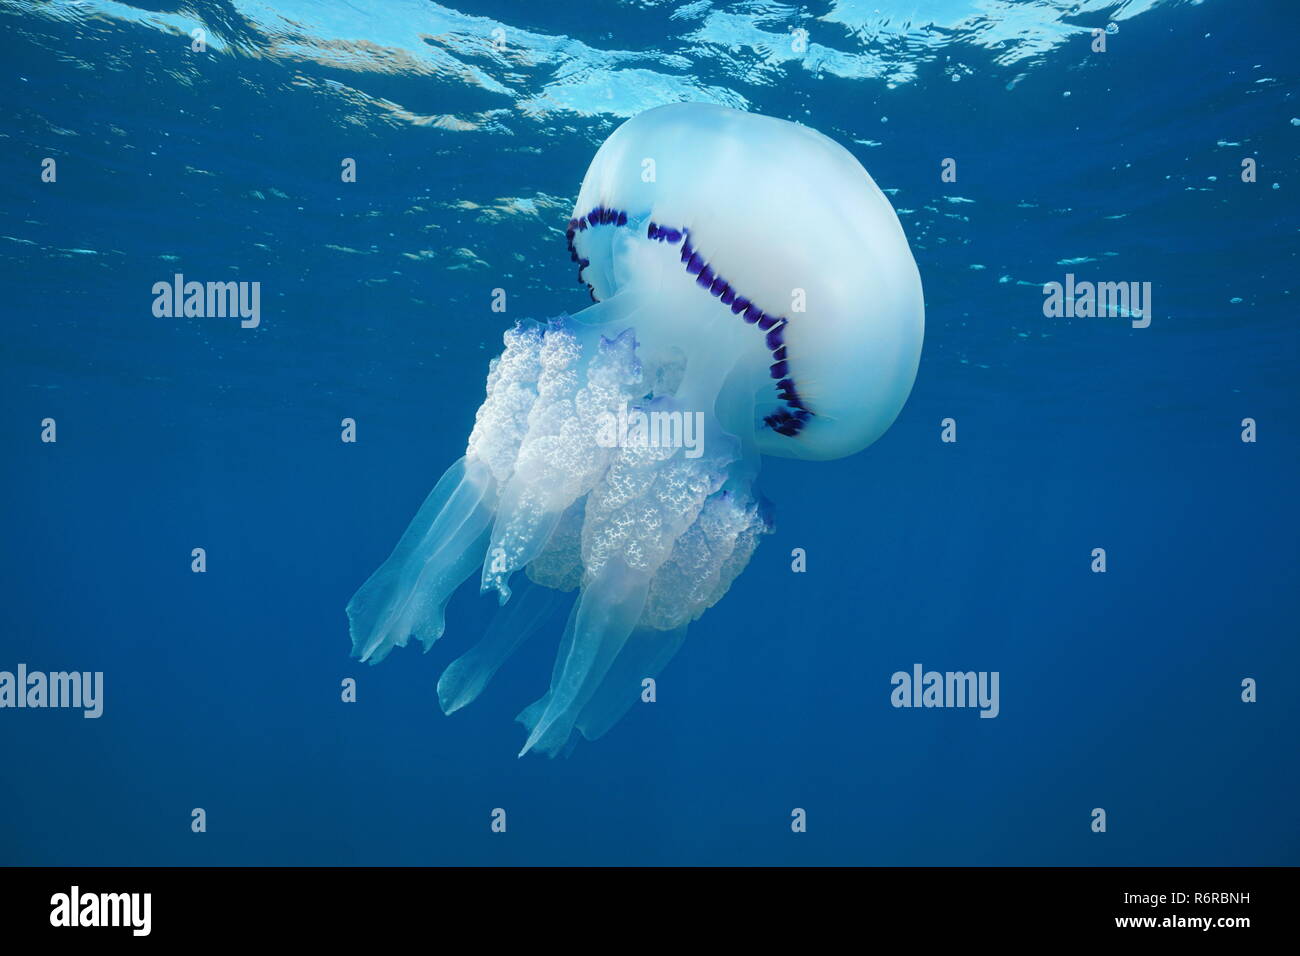 A barrel jellyfish, Rhizostoma pulmo, underwater in the Mediterranean sea, Medes Islands, Costa Brava, Spain Stock Photo